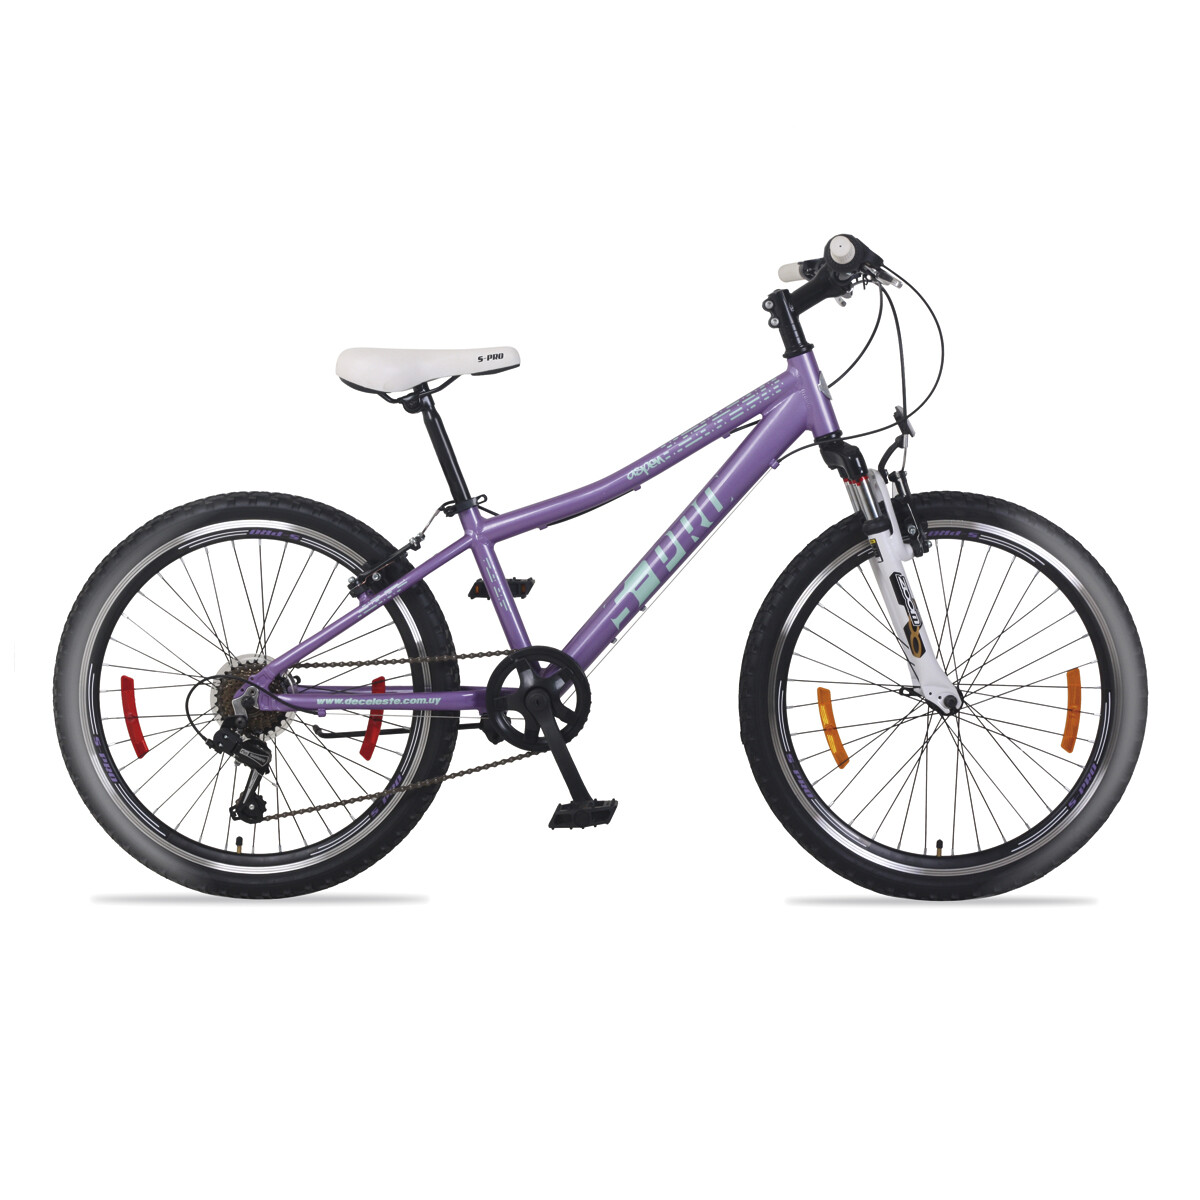 Bicicleta S-PRO Aspen R24 - Violeta 